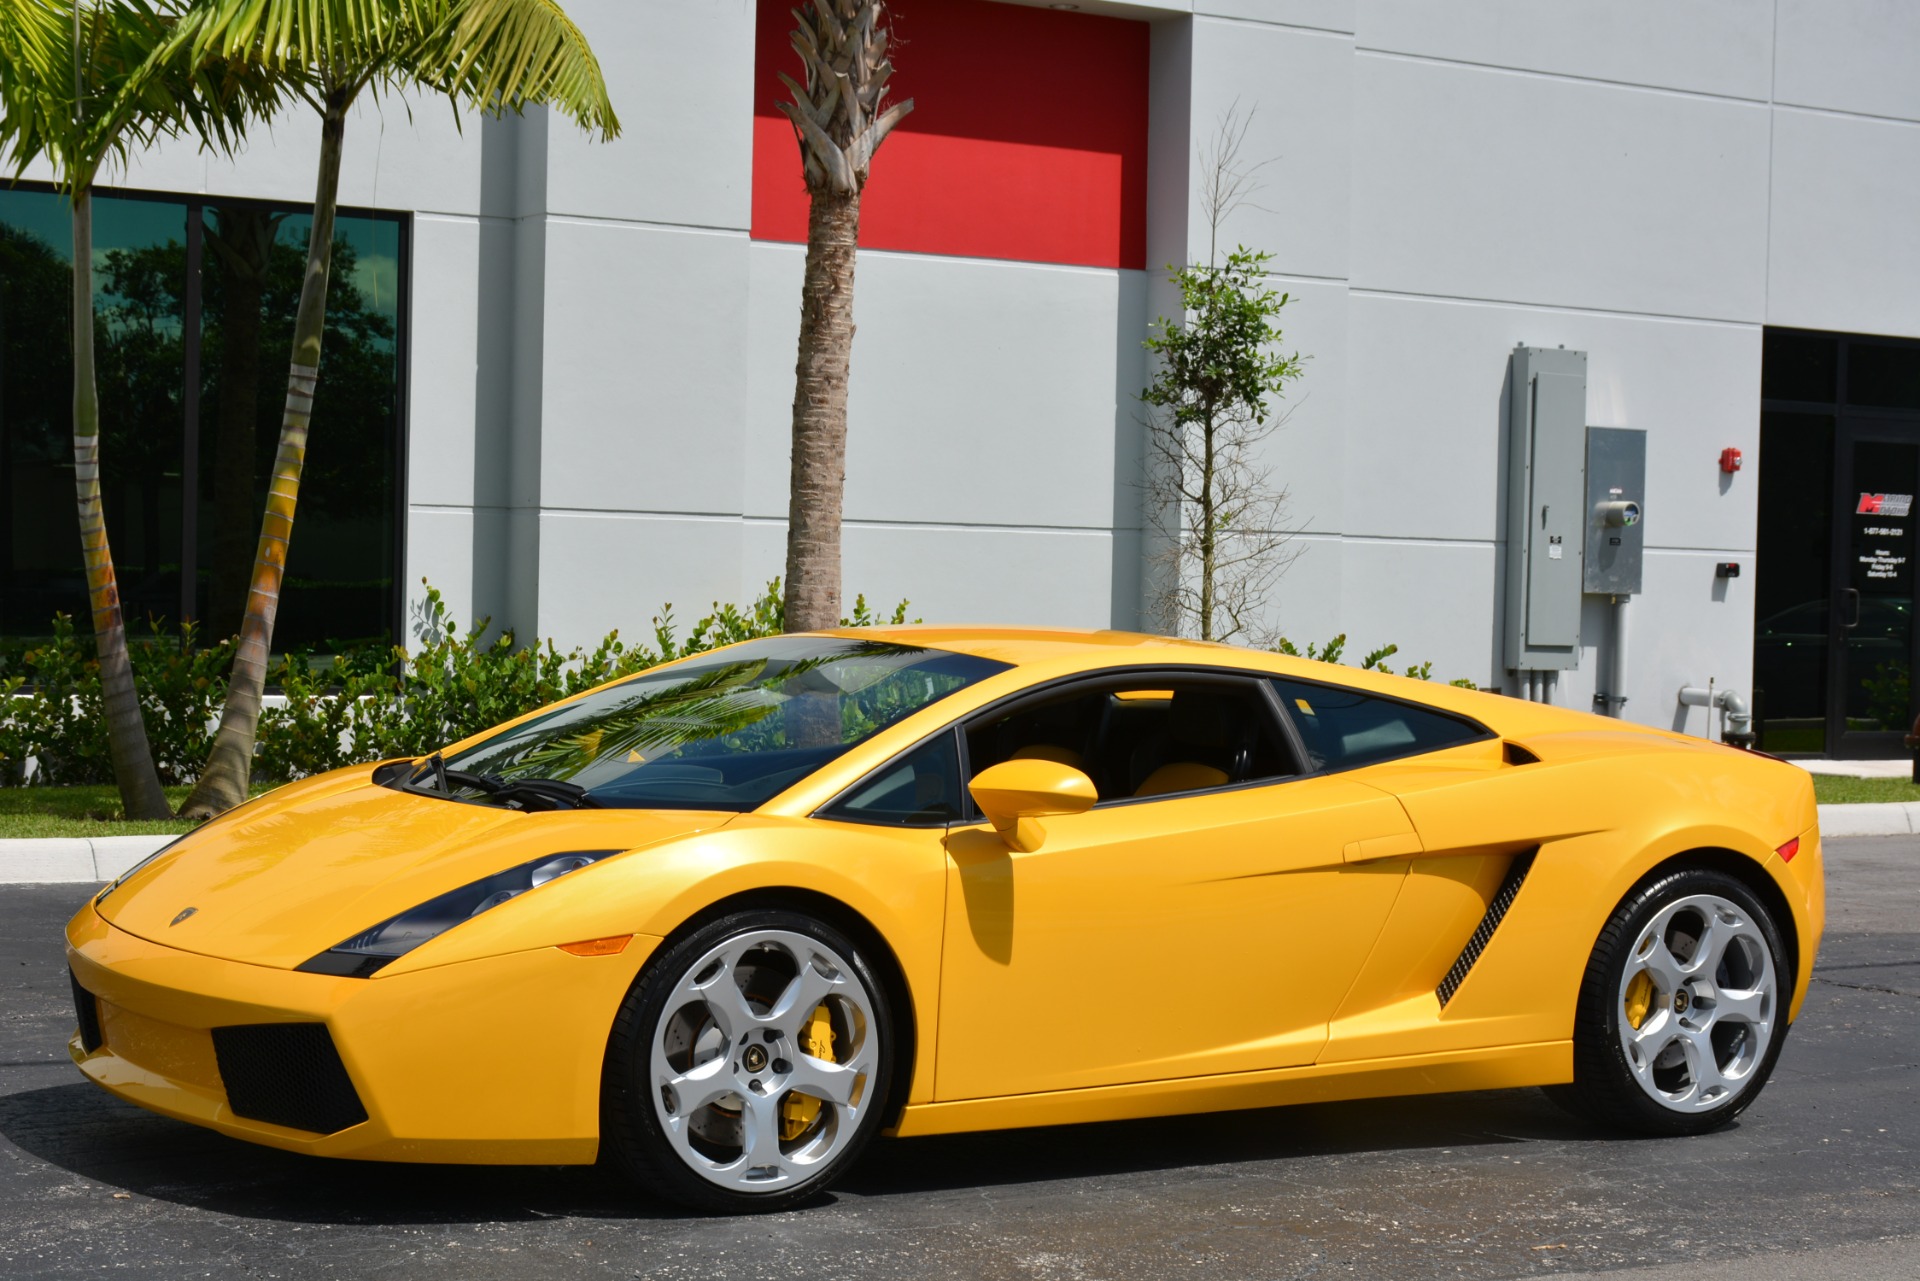 Used 2006 Lamborghini Gallardo For Sale ($96,900) | Marino ...